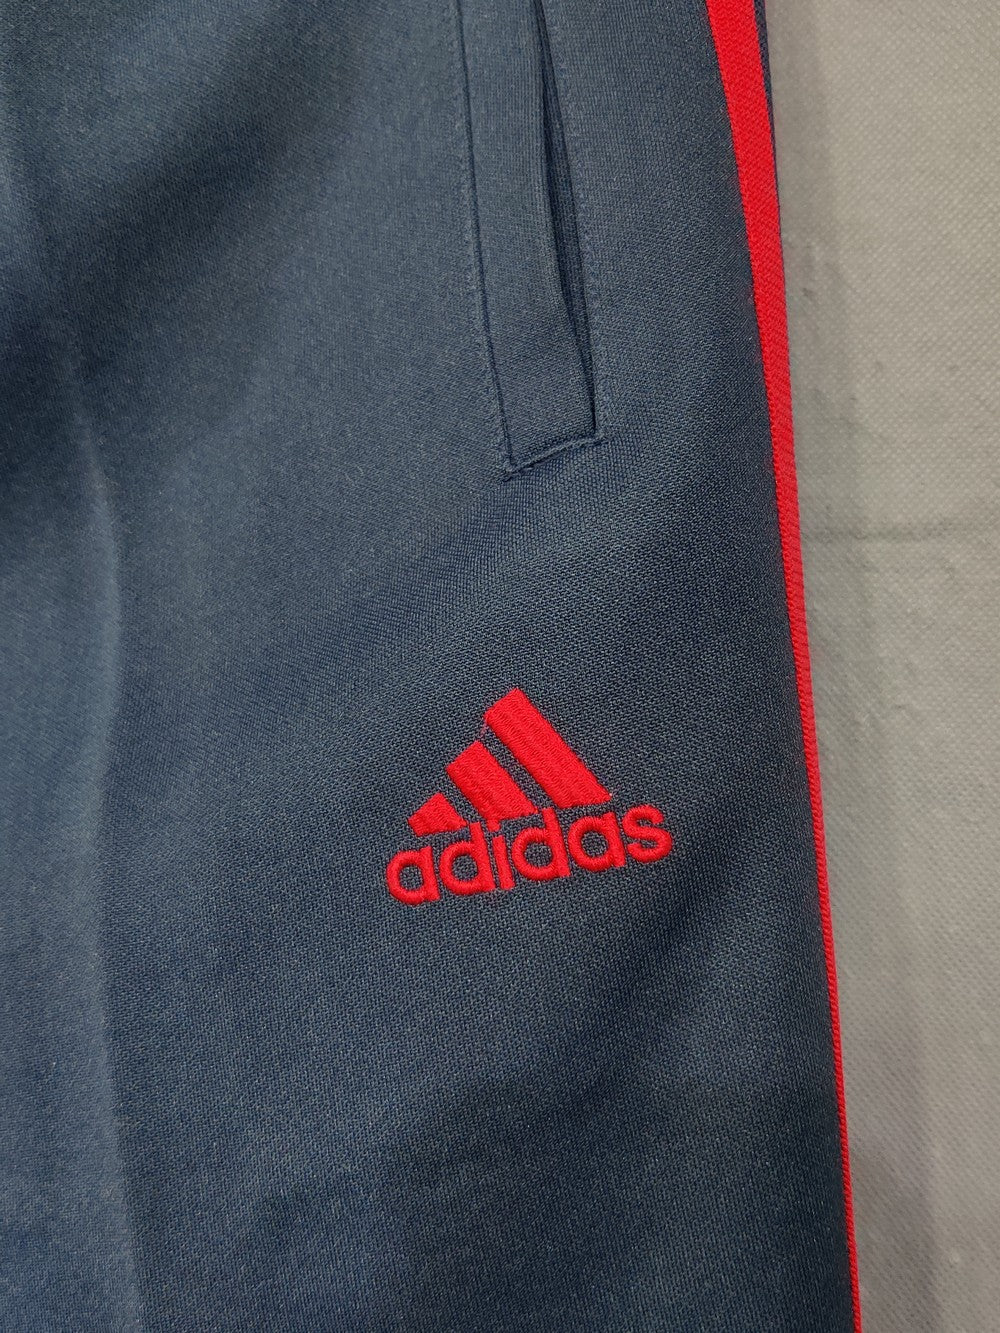 Adidas Branded Original Polyester For Men Tracksuits